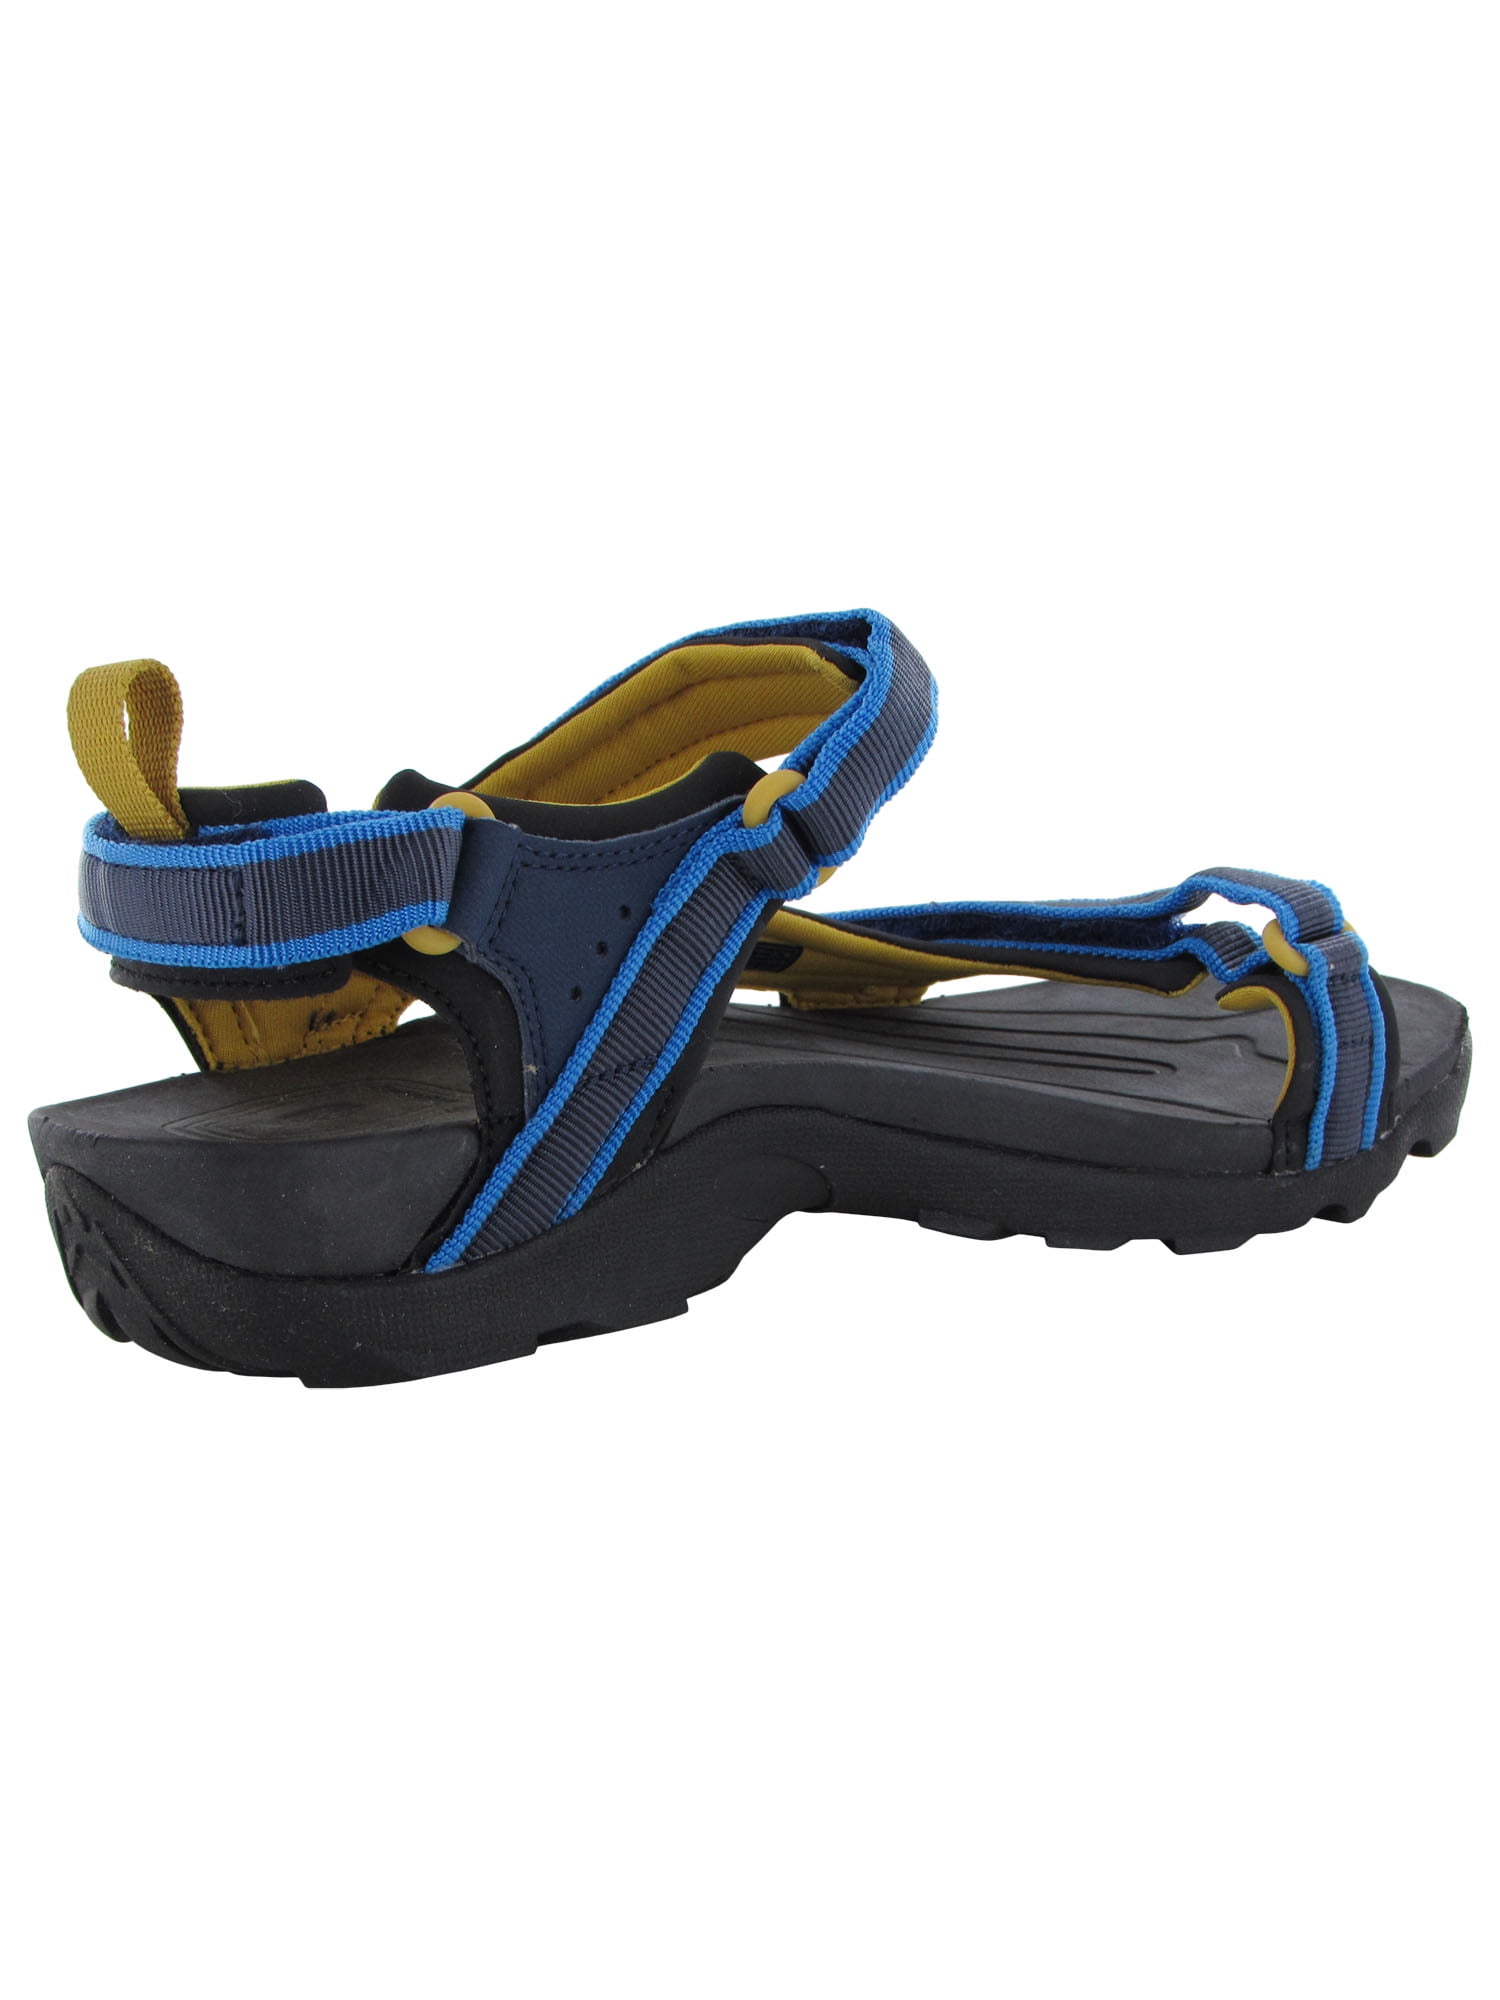 Teva Tanza Open Toe Sports Sandal Shoes, Navy, US 5 Big Kid - Walmart.com